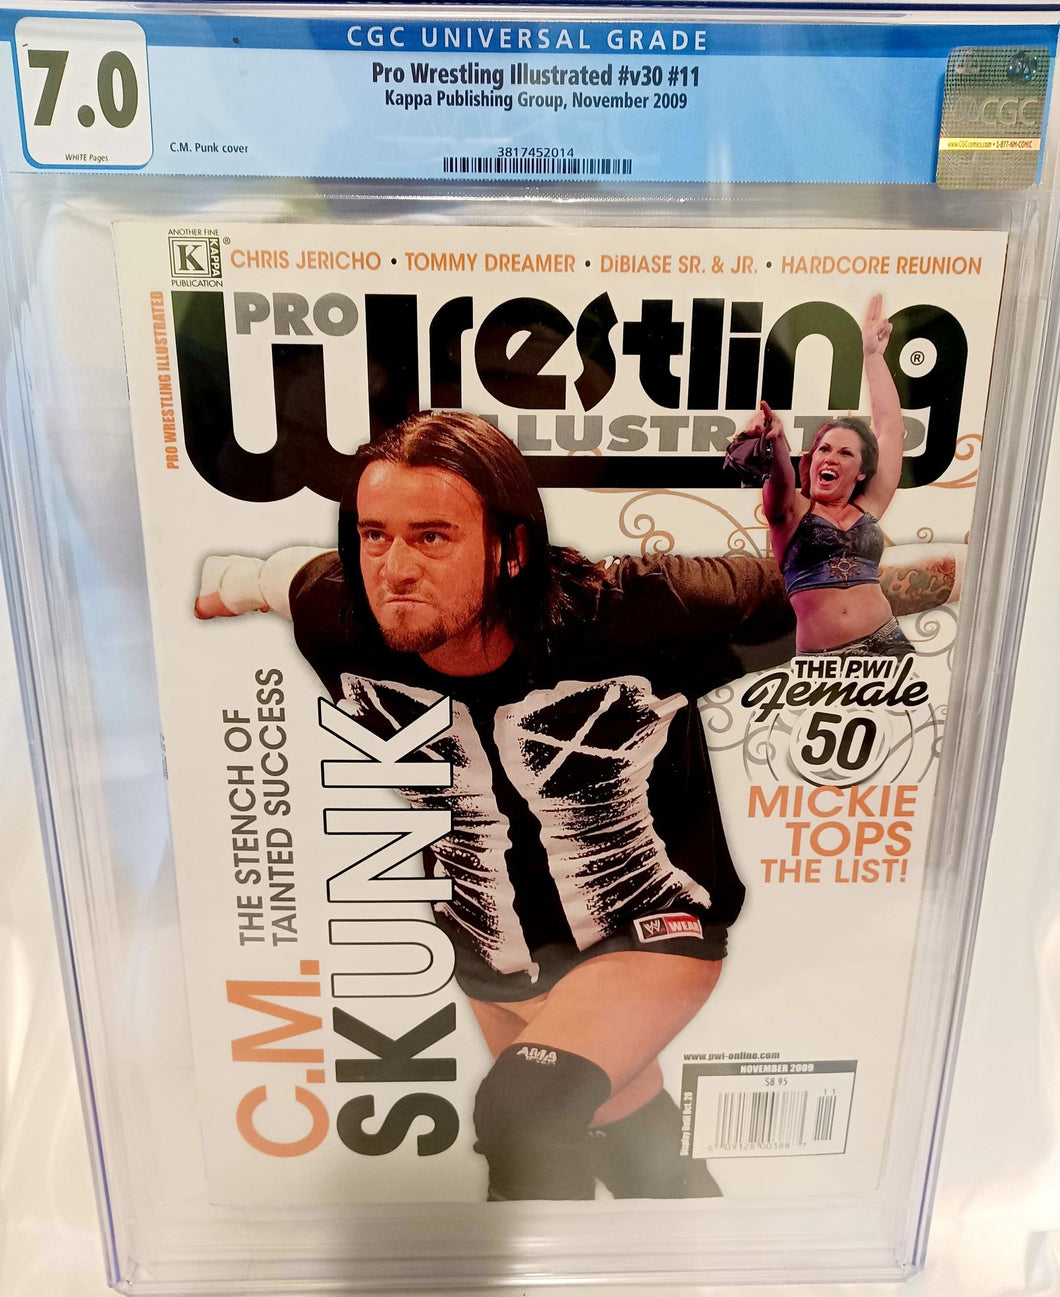 Pro Wrestling Illustrated Magazine Nov 2009 CGC 7.0 - CM Punk & Mickie James AEW